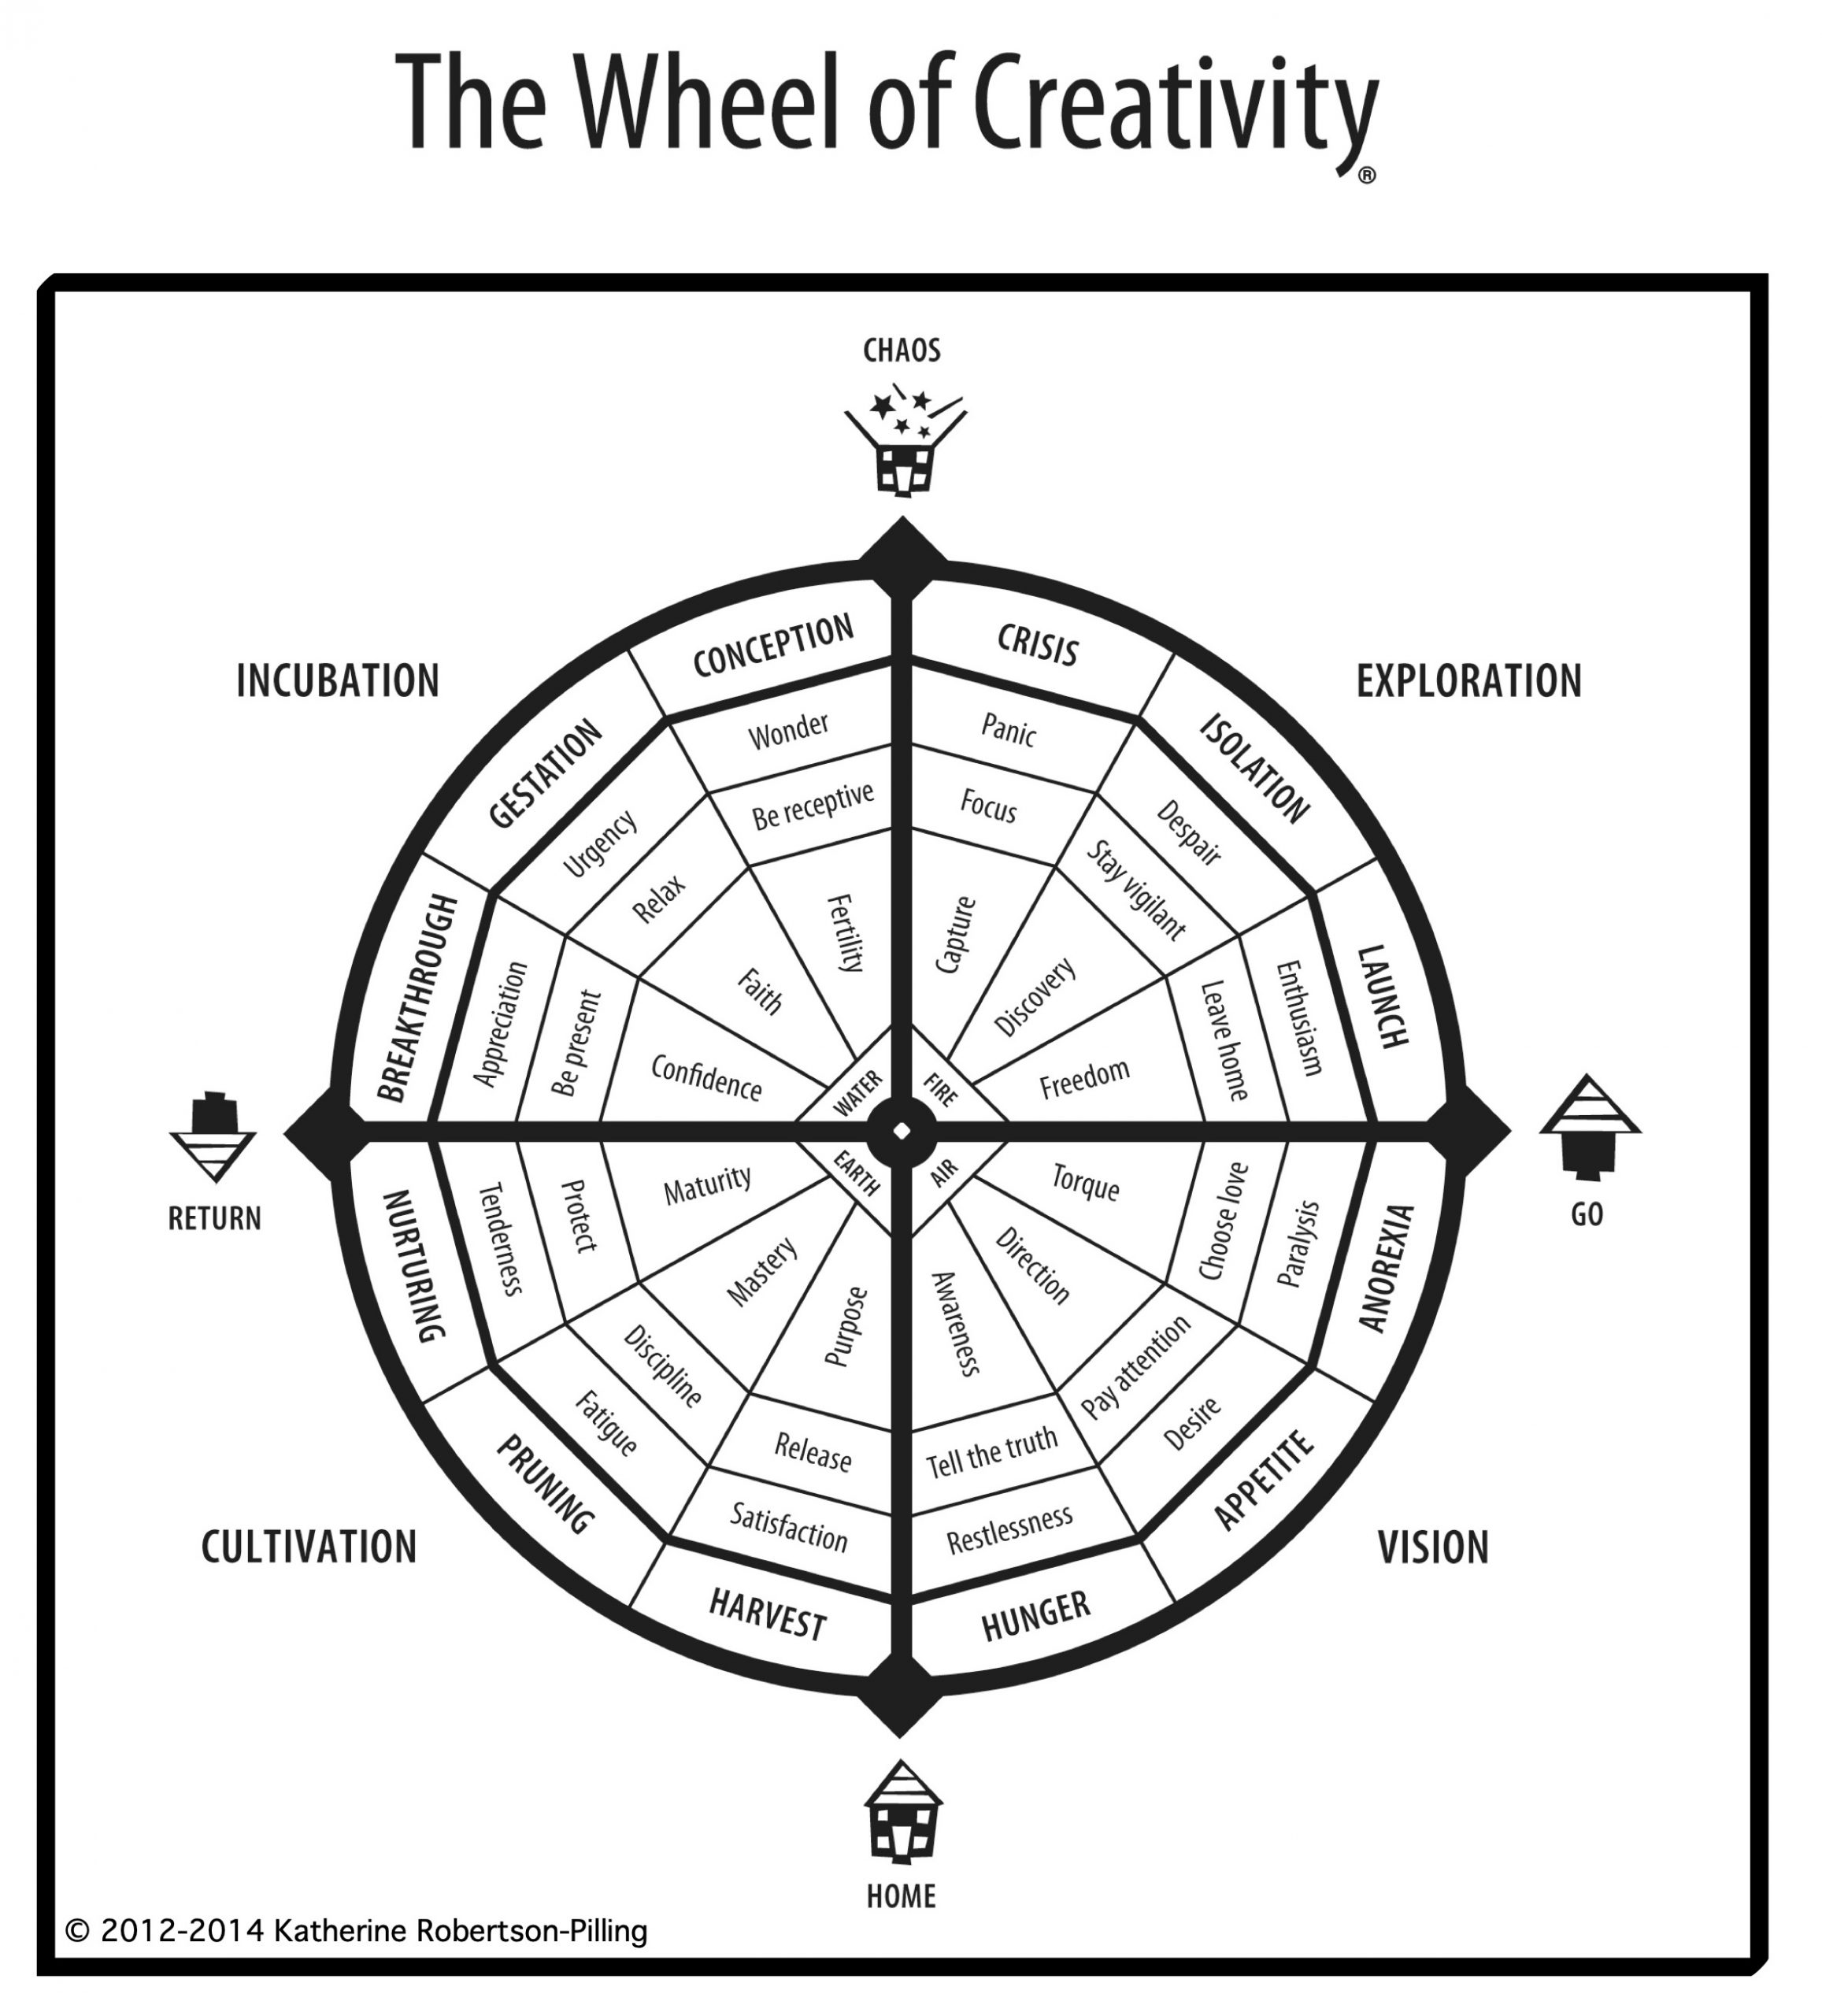 The Wheel of Creativity image